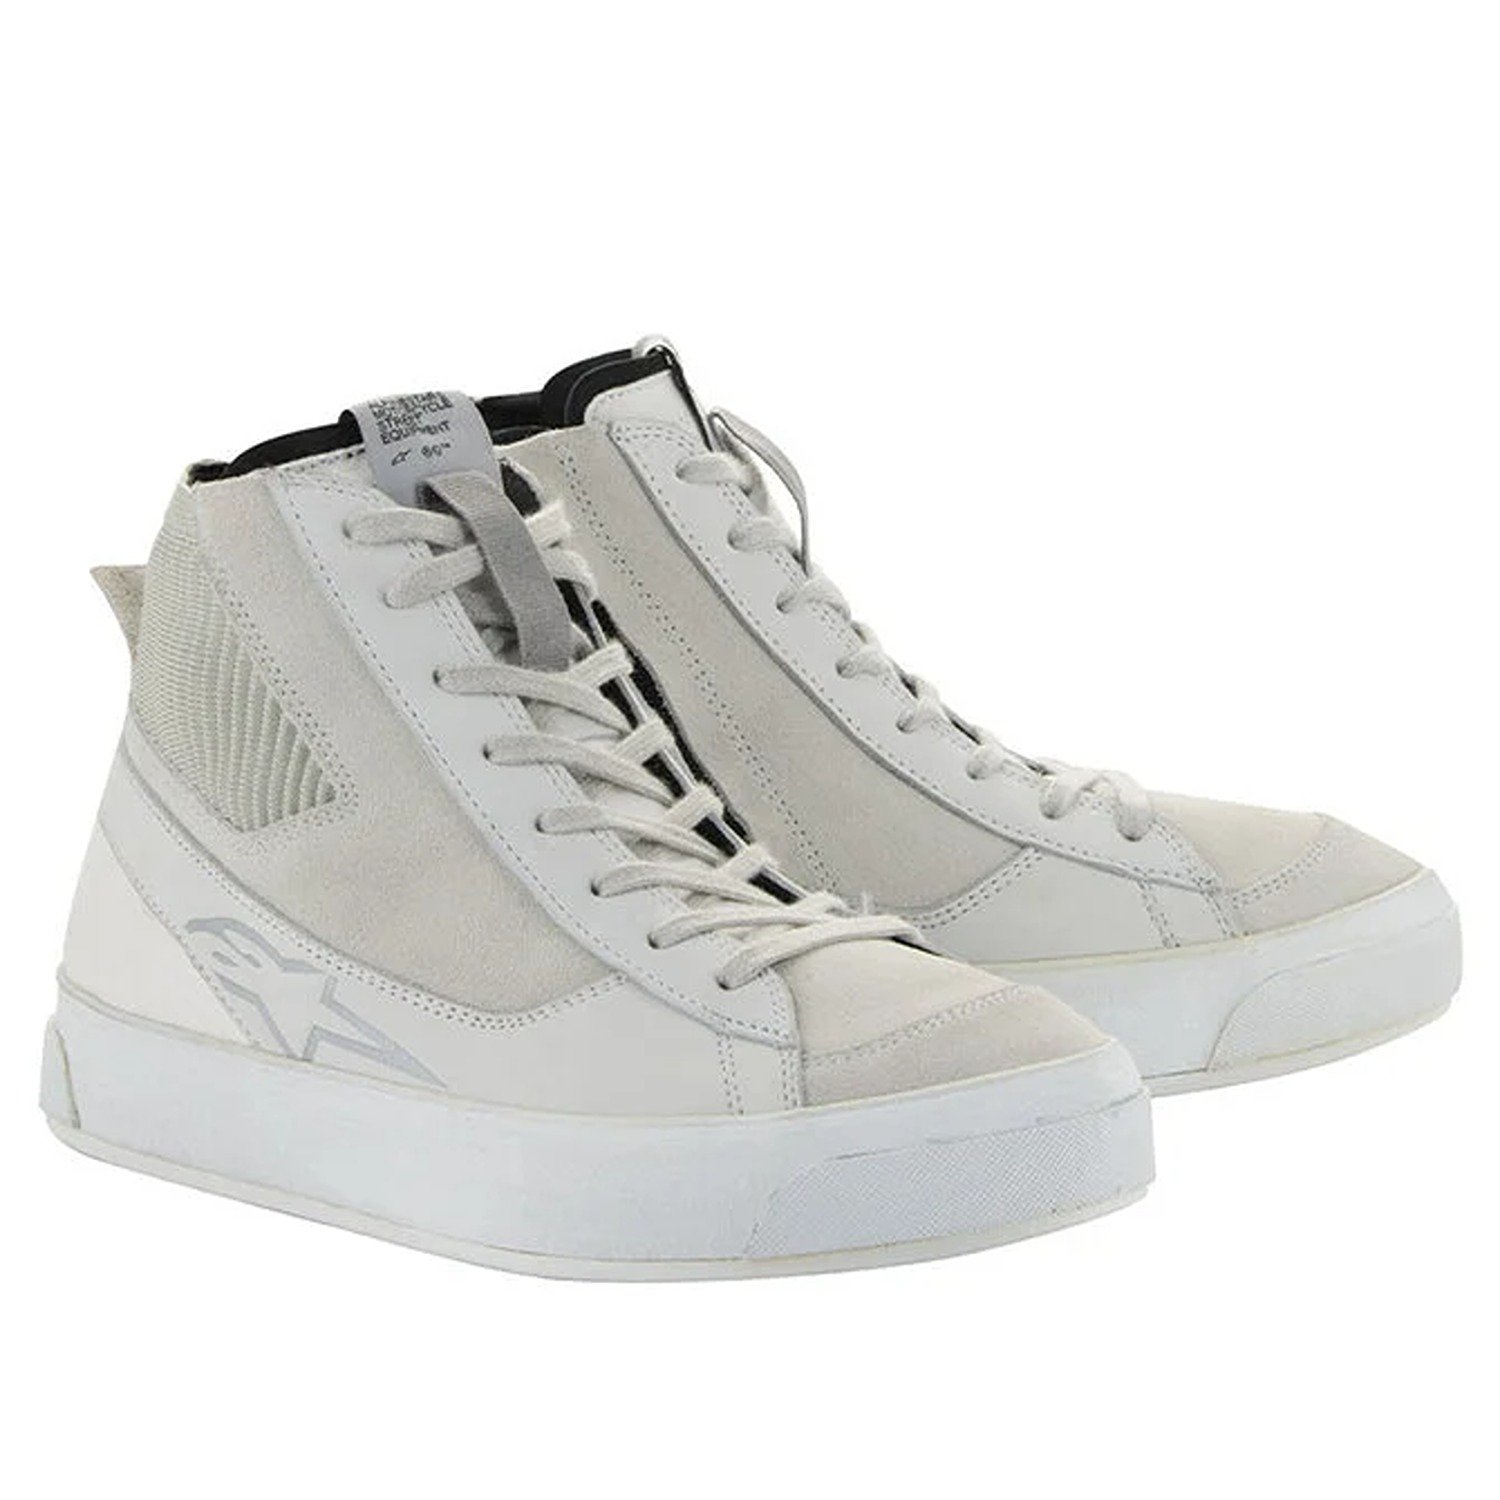 Image of EU Alpinestars Stella Stated Podium Shoes White Cool Gray Taille US 95